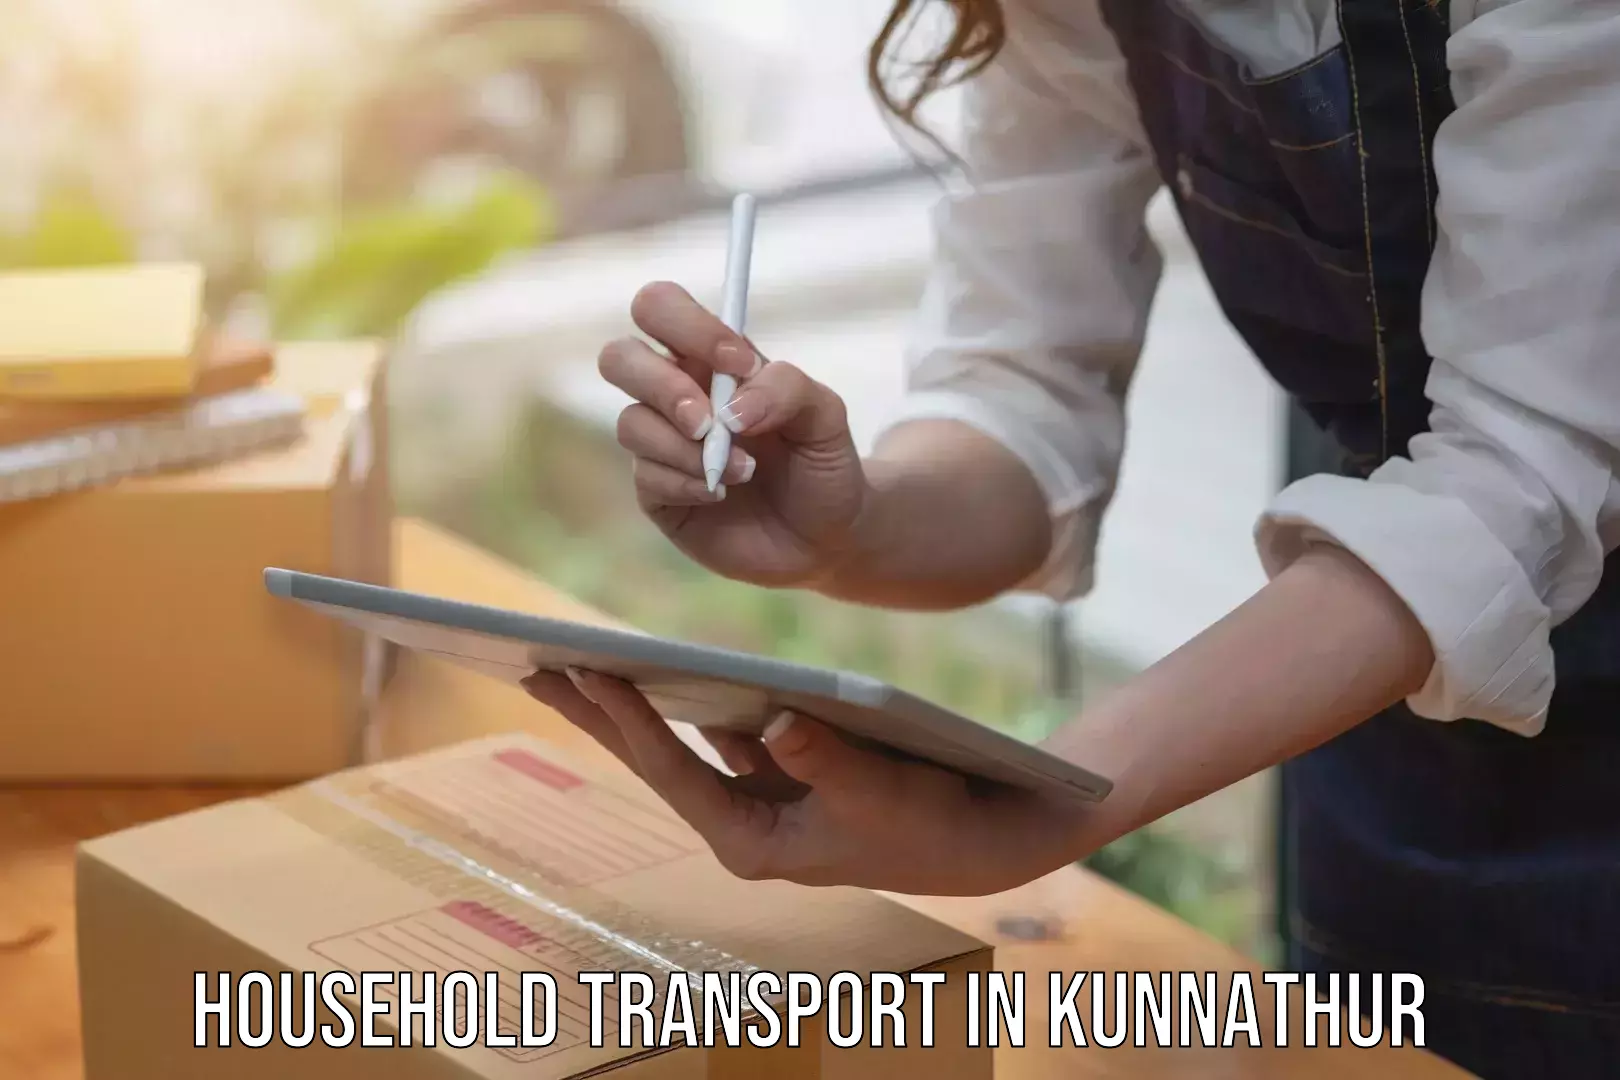 Quality household transport in Kunnathur